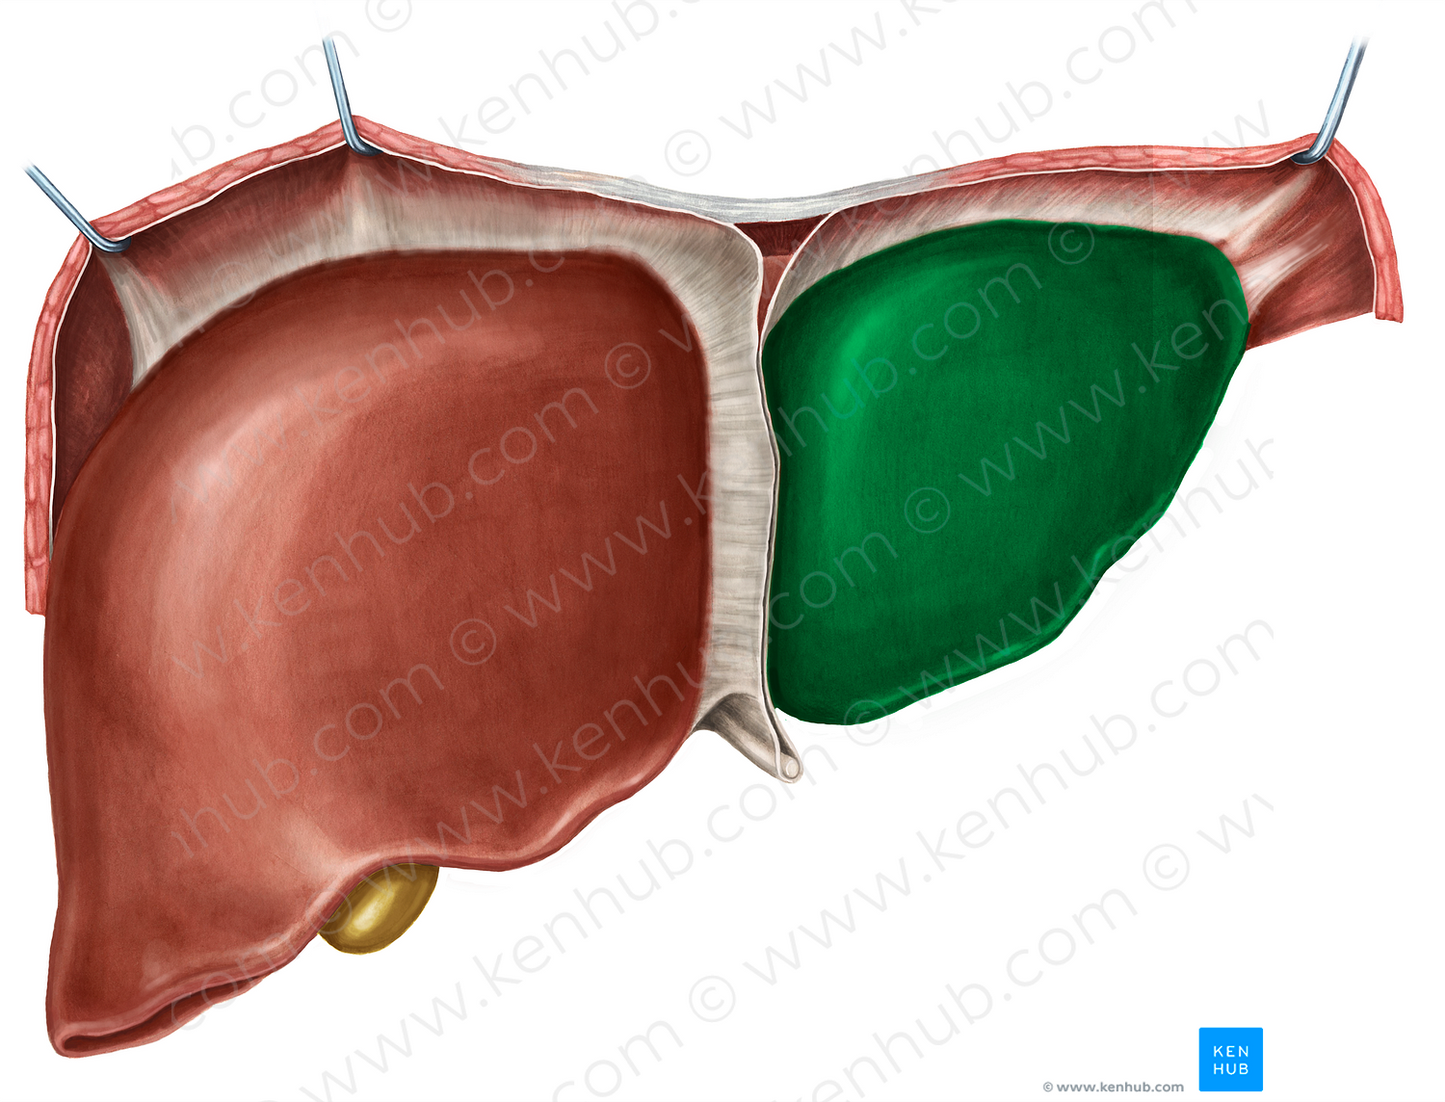 Left lobe of liver (#4810)